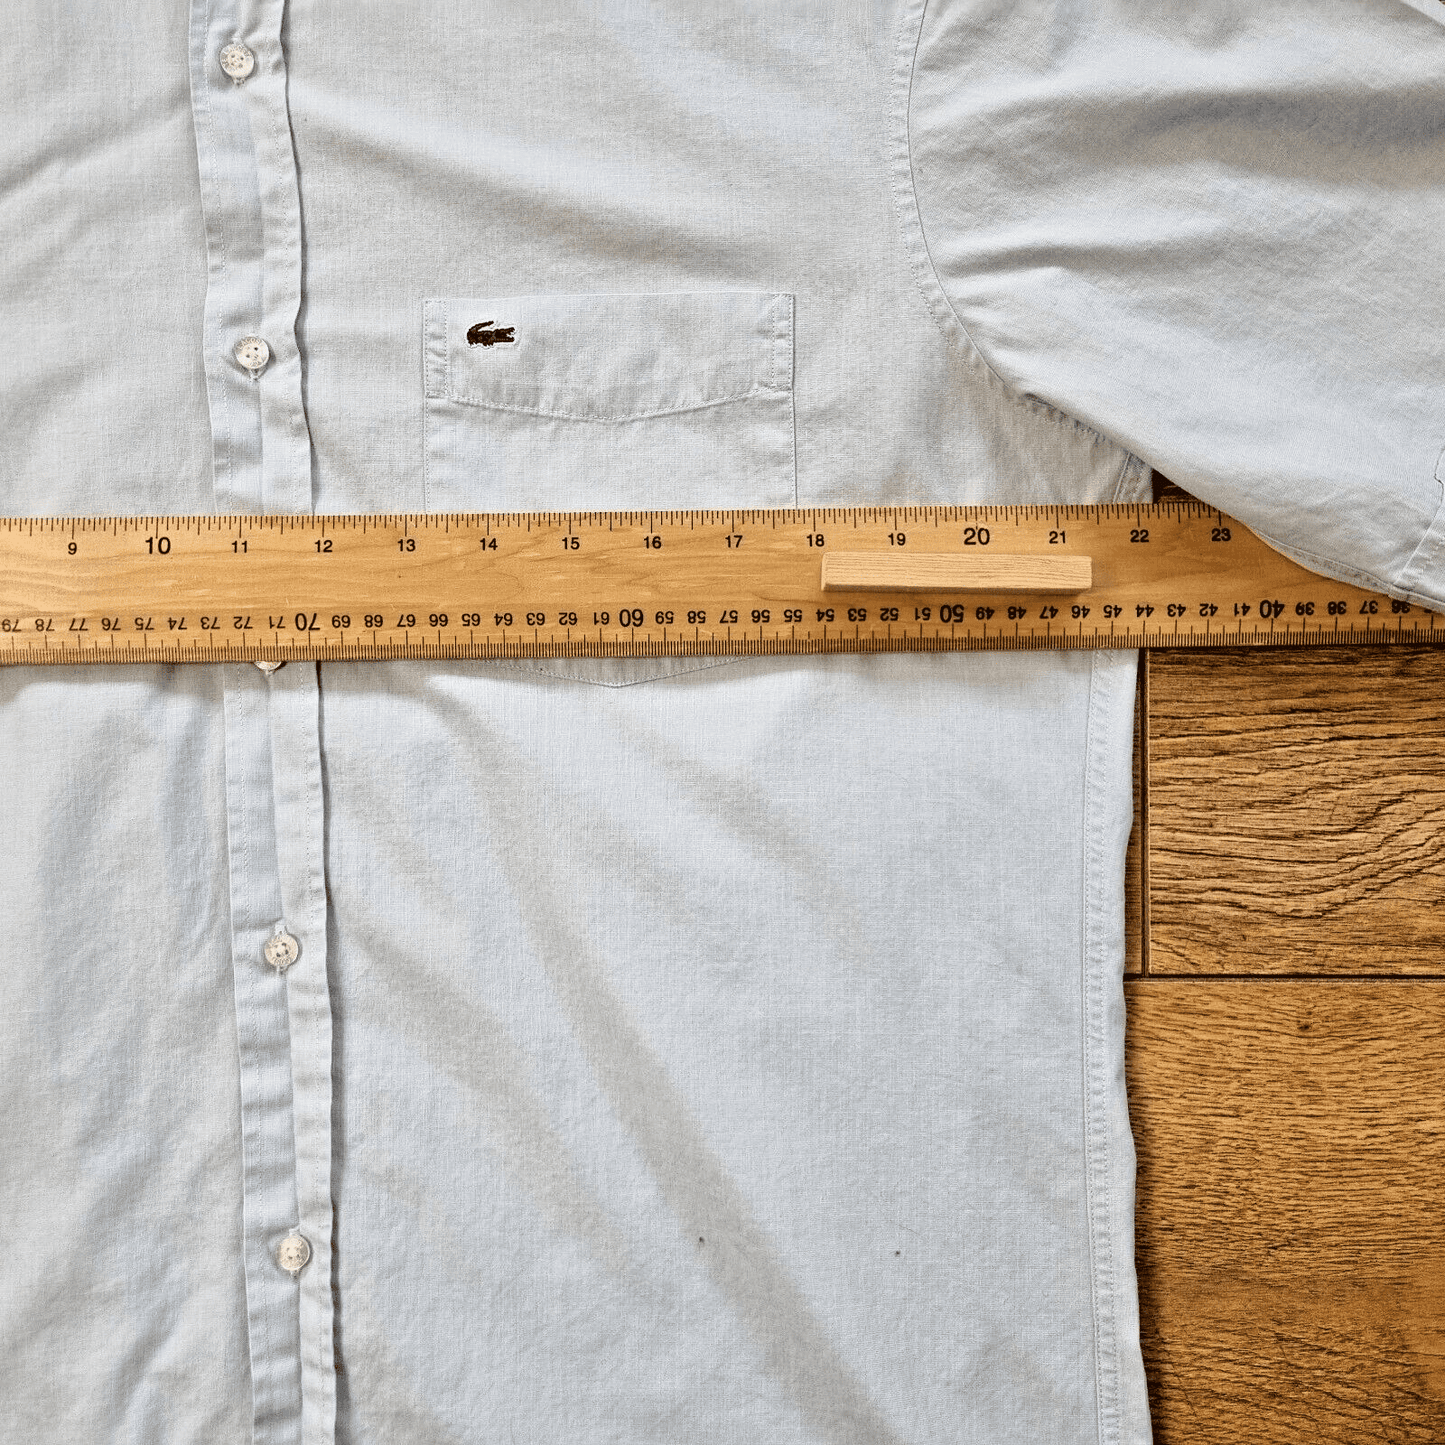 Lacoste Mens Short Sleeve Shirt 100% Cotton Button Down Collar Excellent Cond